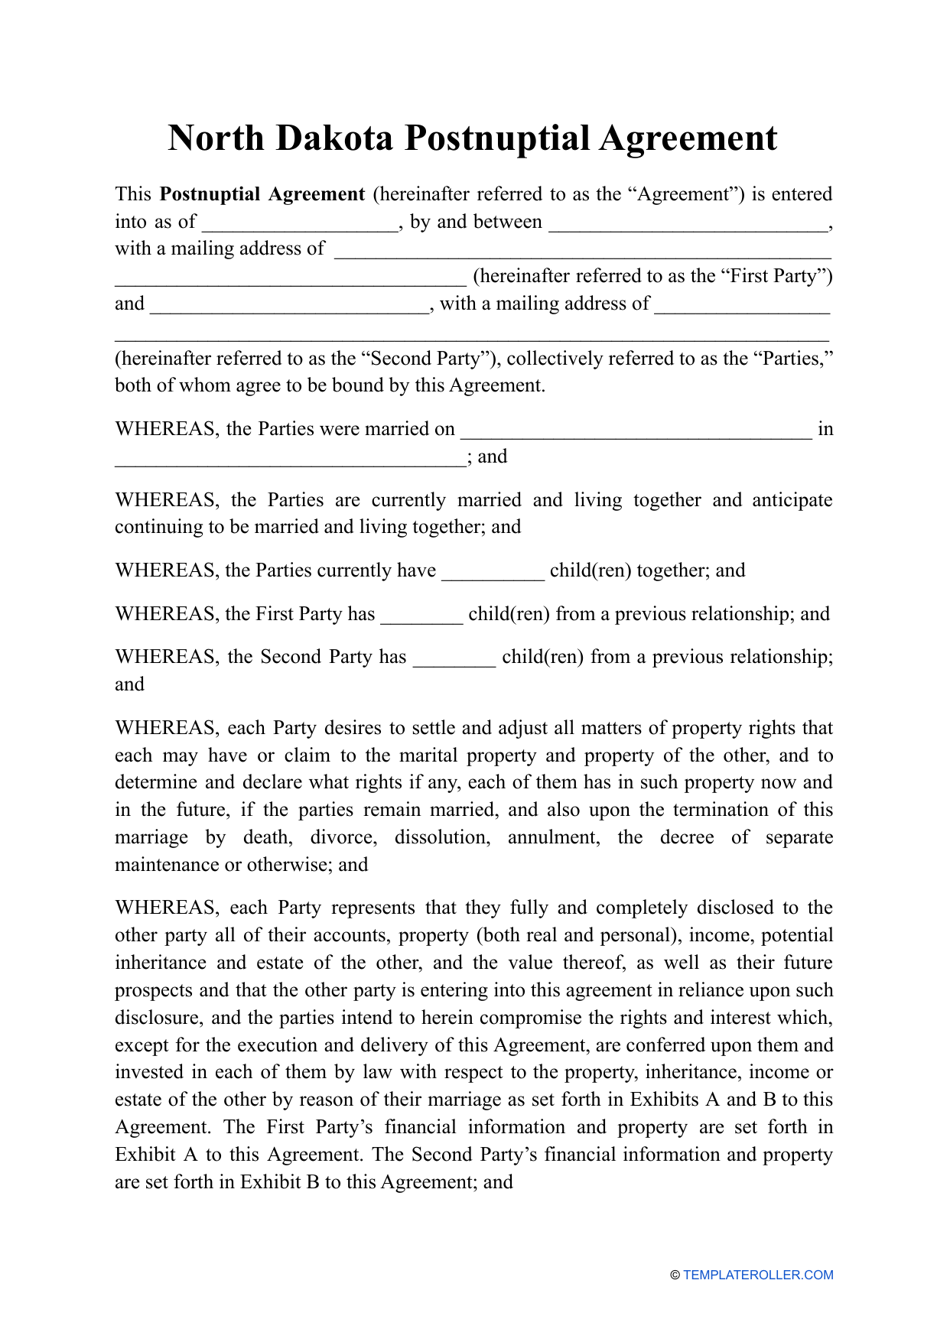 Postnuptial Agreement Template - North Dakota, Page 1